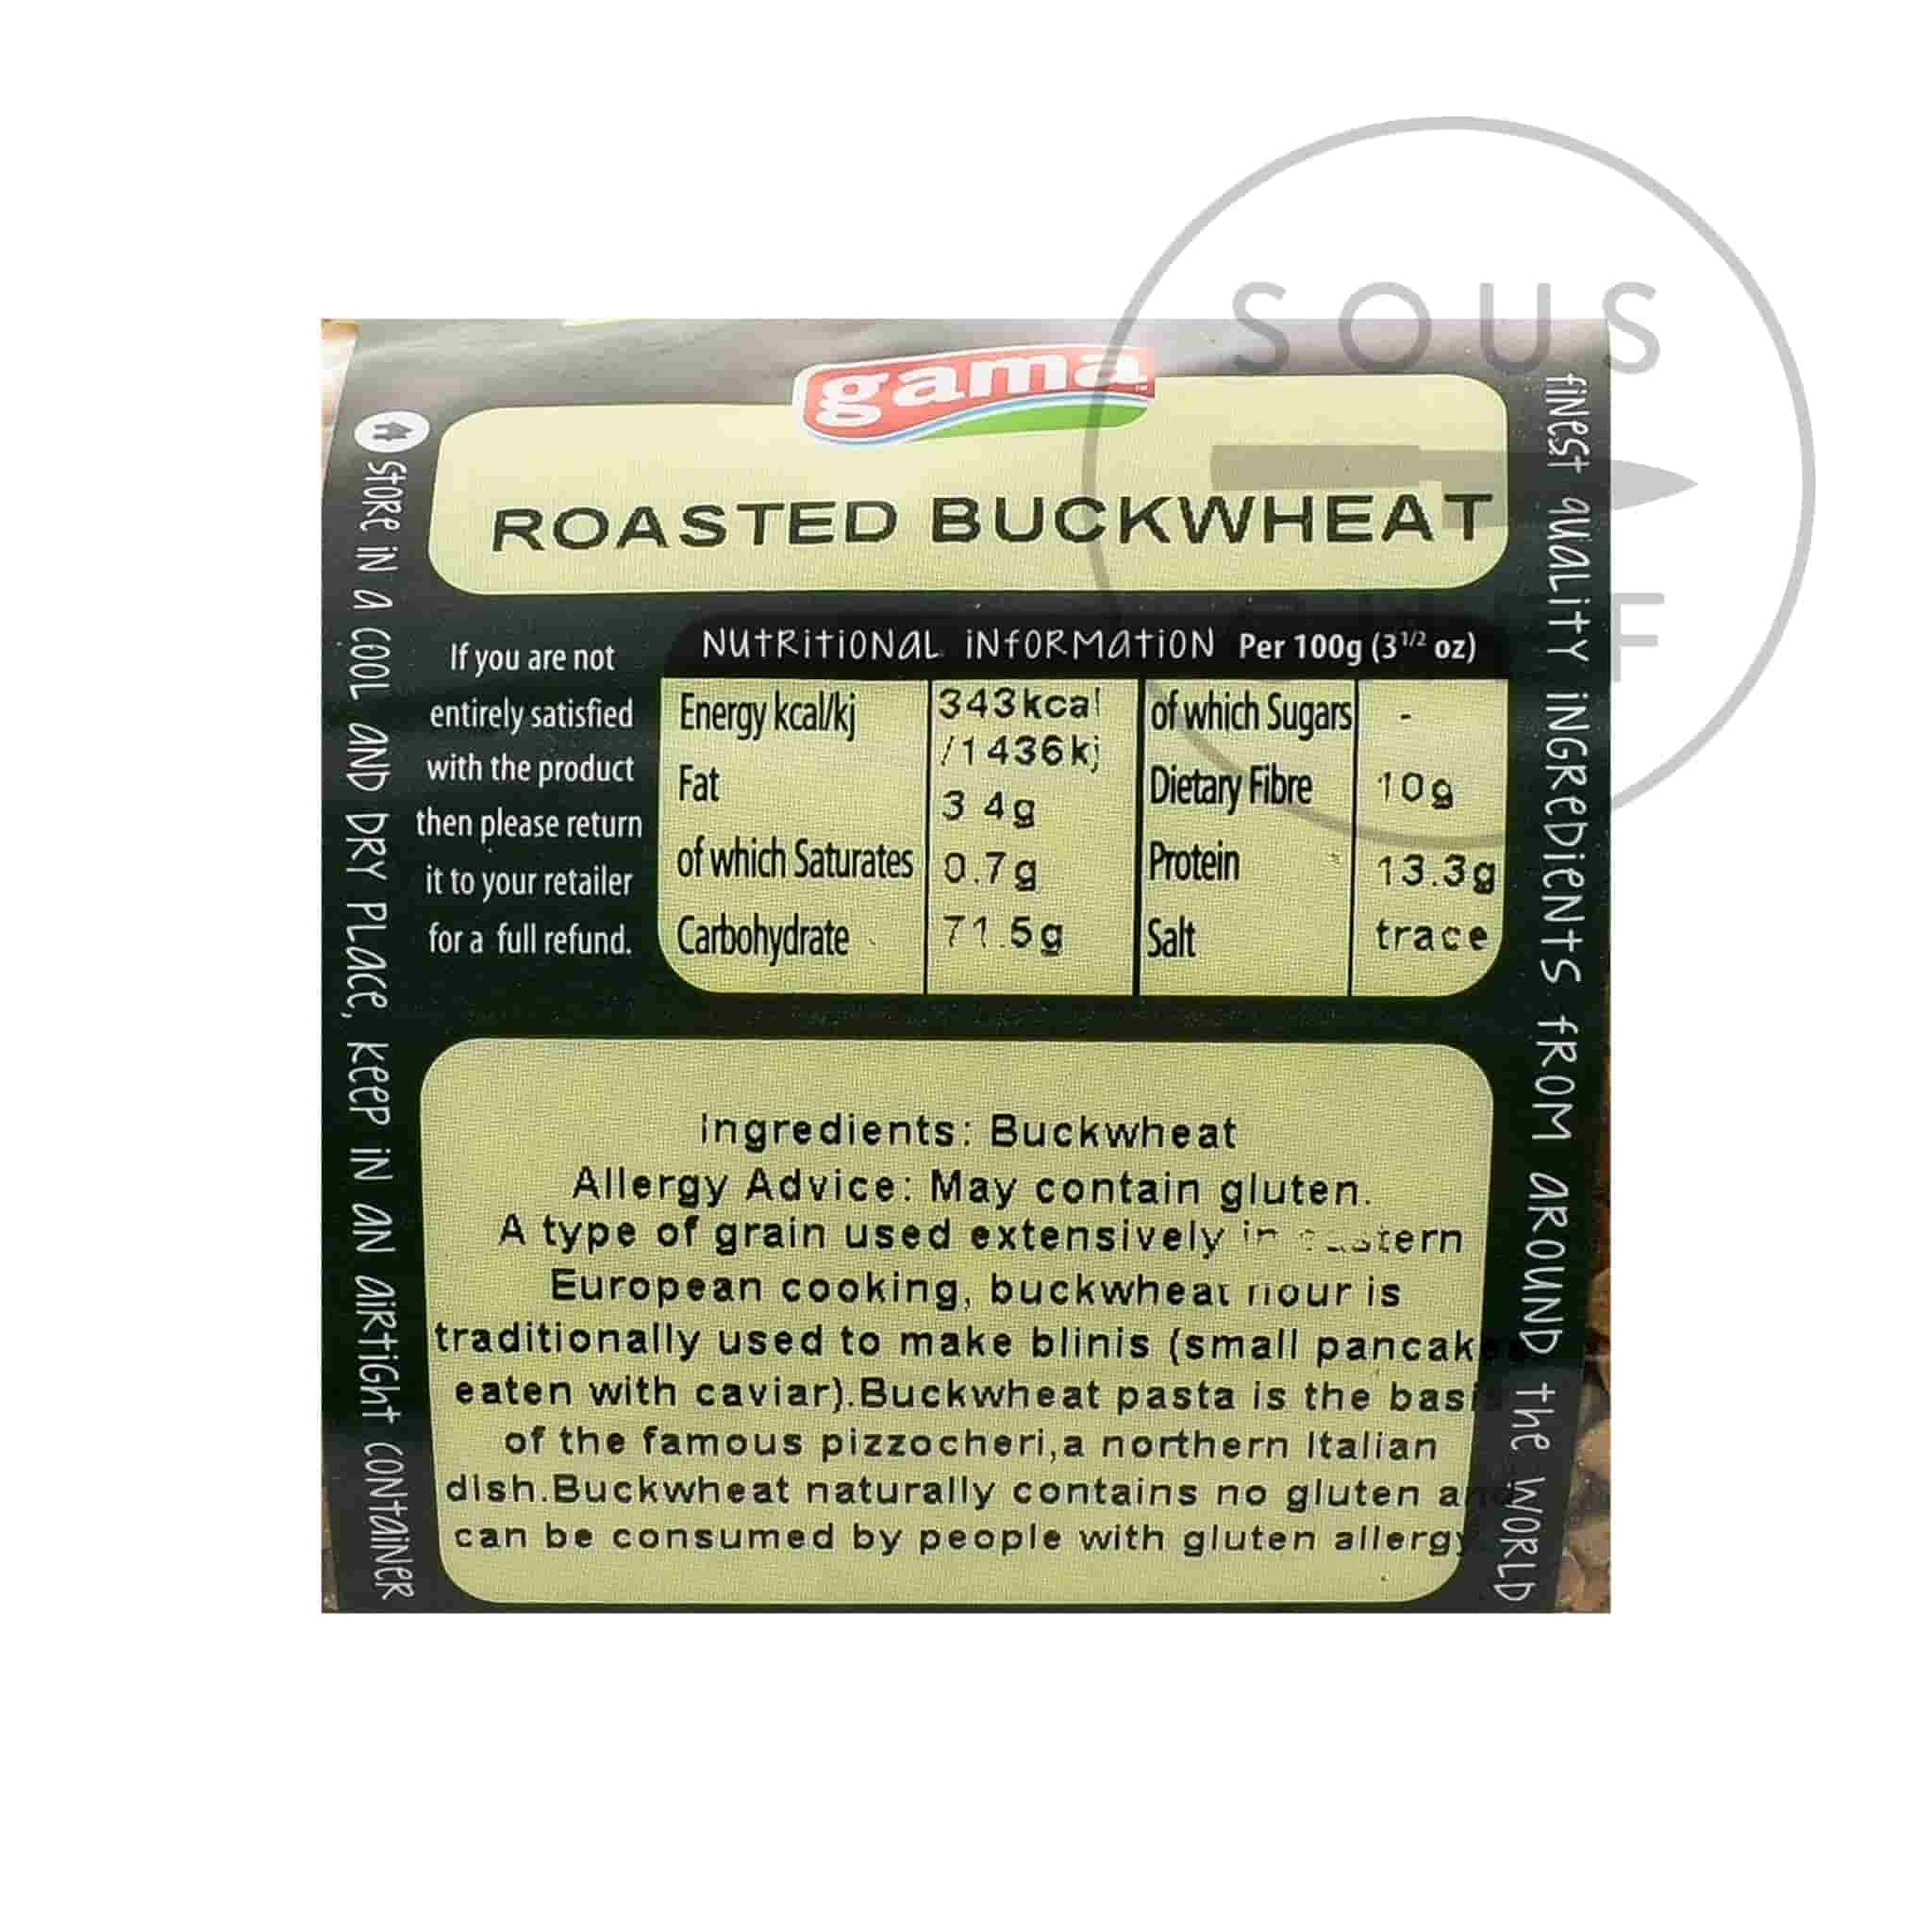 Roasted Buckwheat 1kg